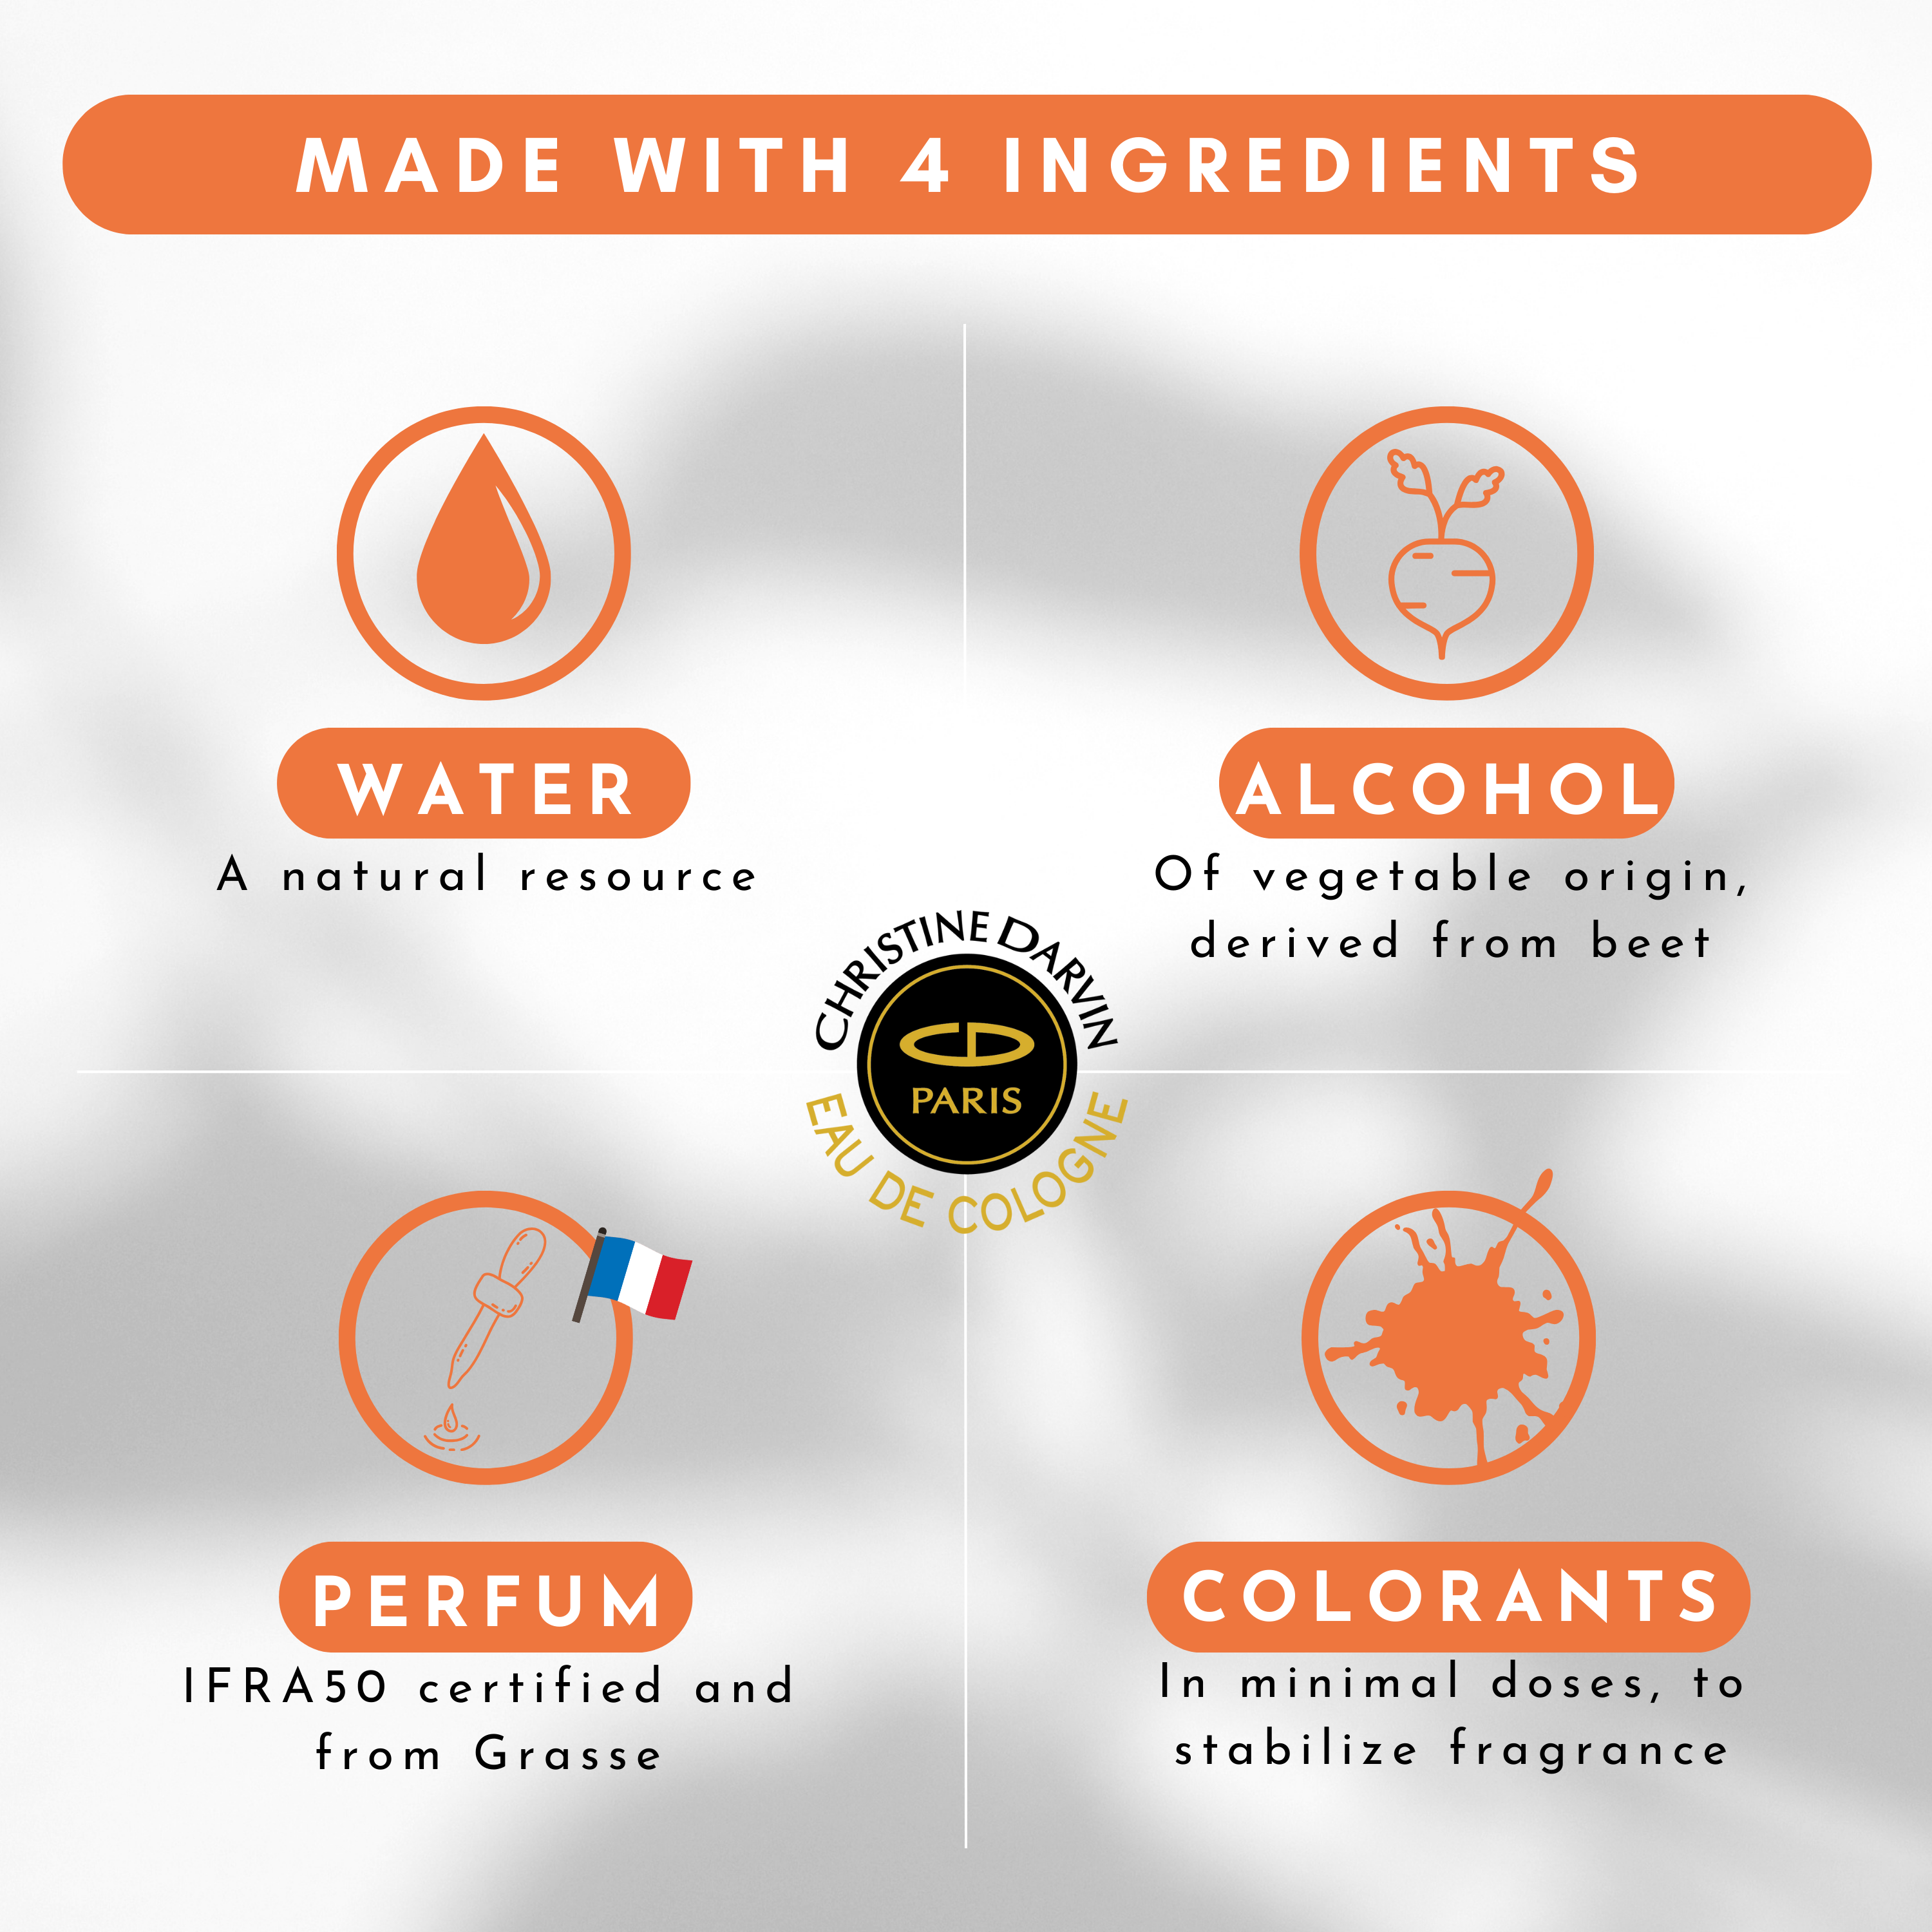 Ingredients Eau de Cologne parfum Natural 97% natural origin and 100% French